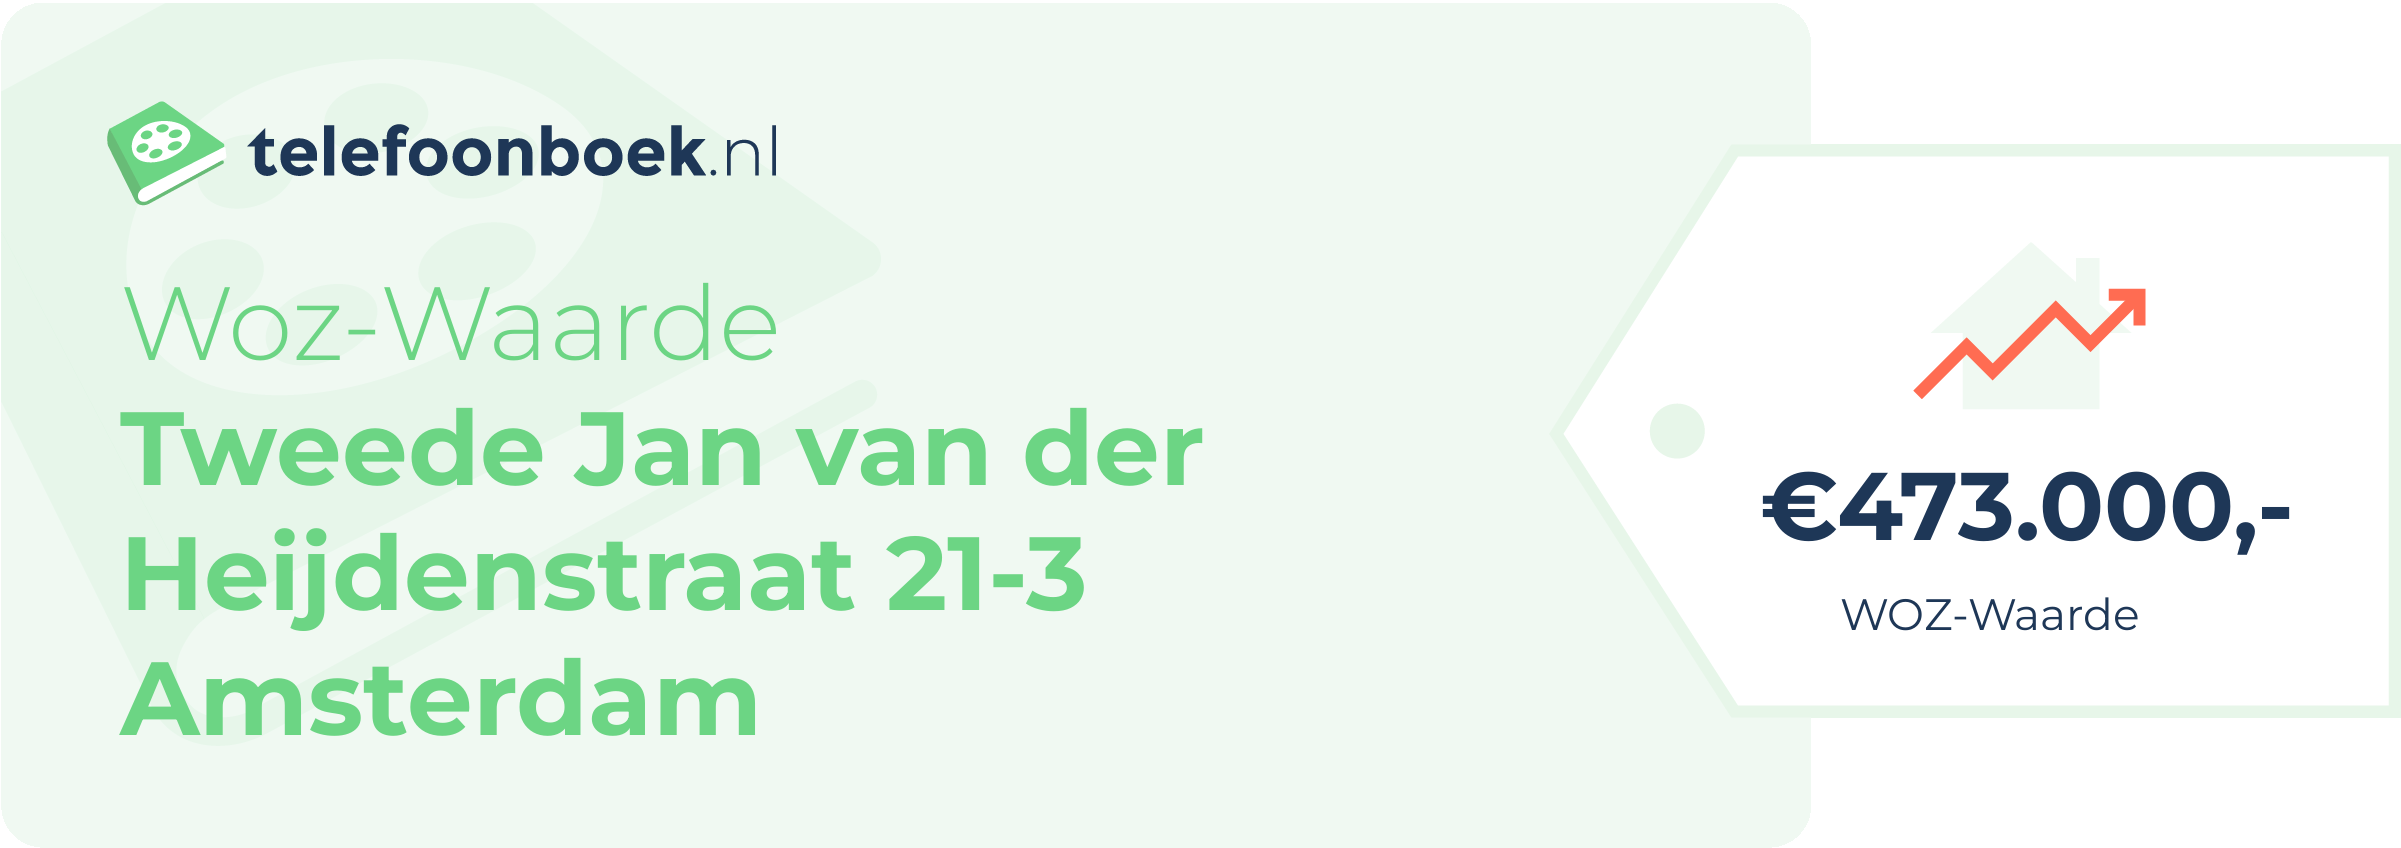 WOZ-waarde Tweede Jan Van Der Heijdenstraat 21-3 Amsterdam